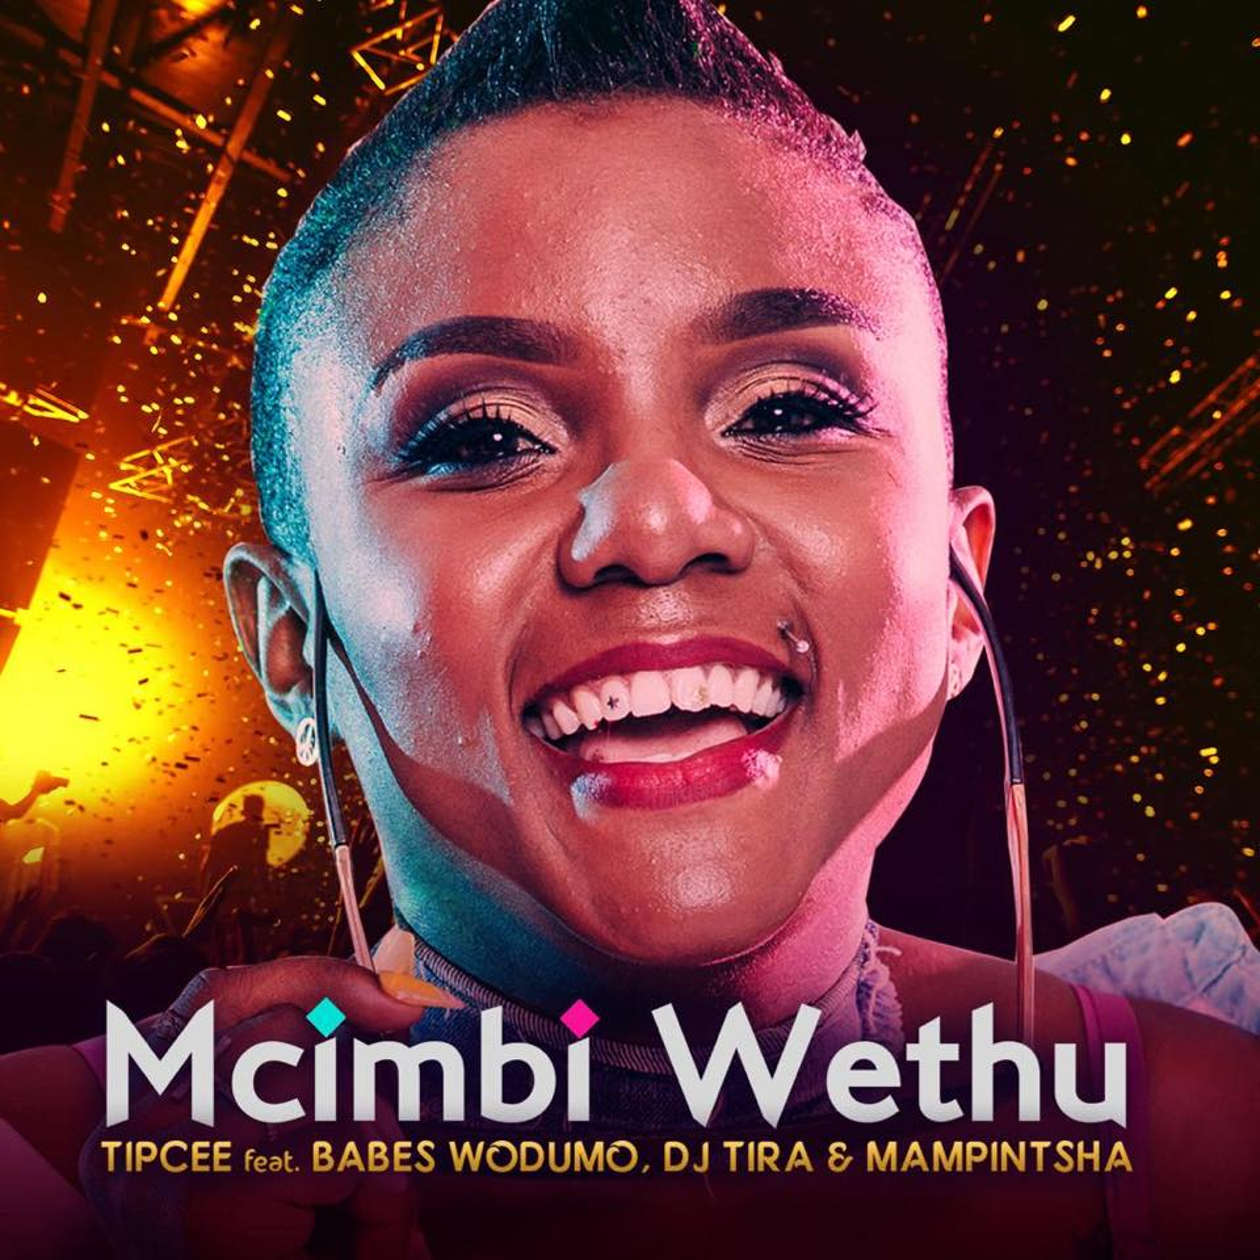 Tipcee - Mcimbi Wethu (feat. Babes Wodumo, DJ Tira & Mampintsha)